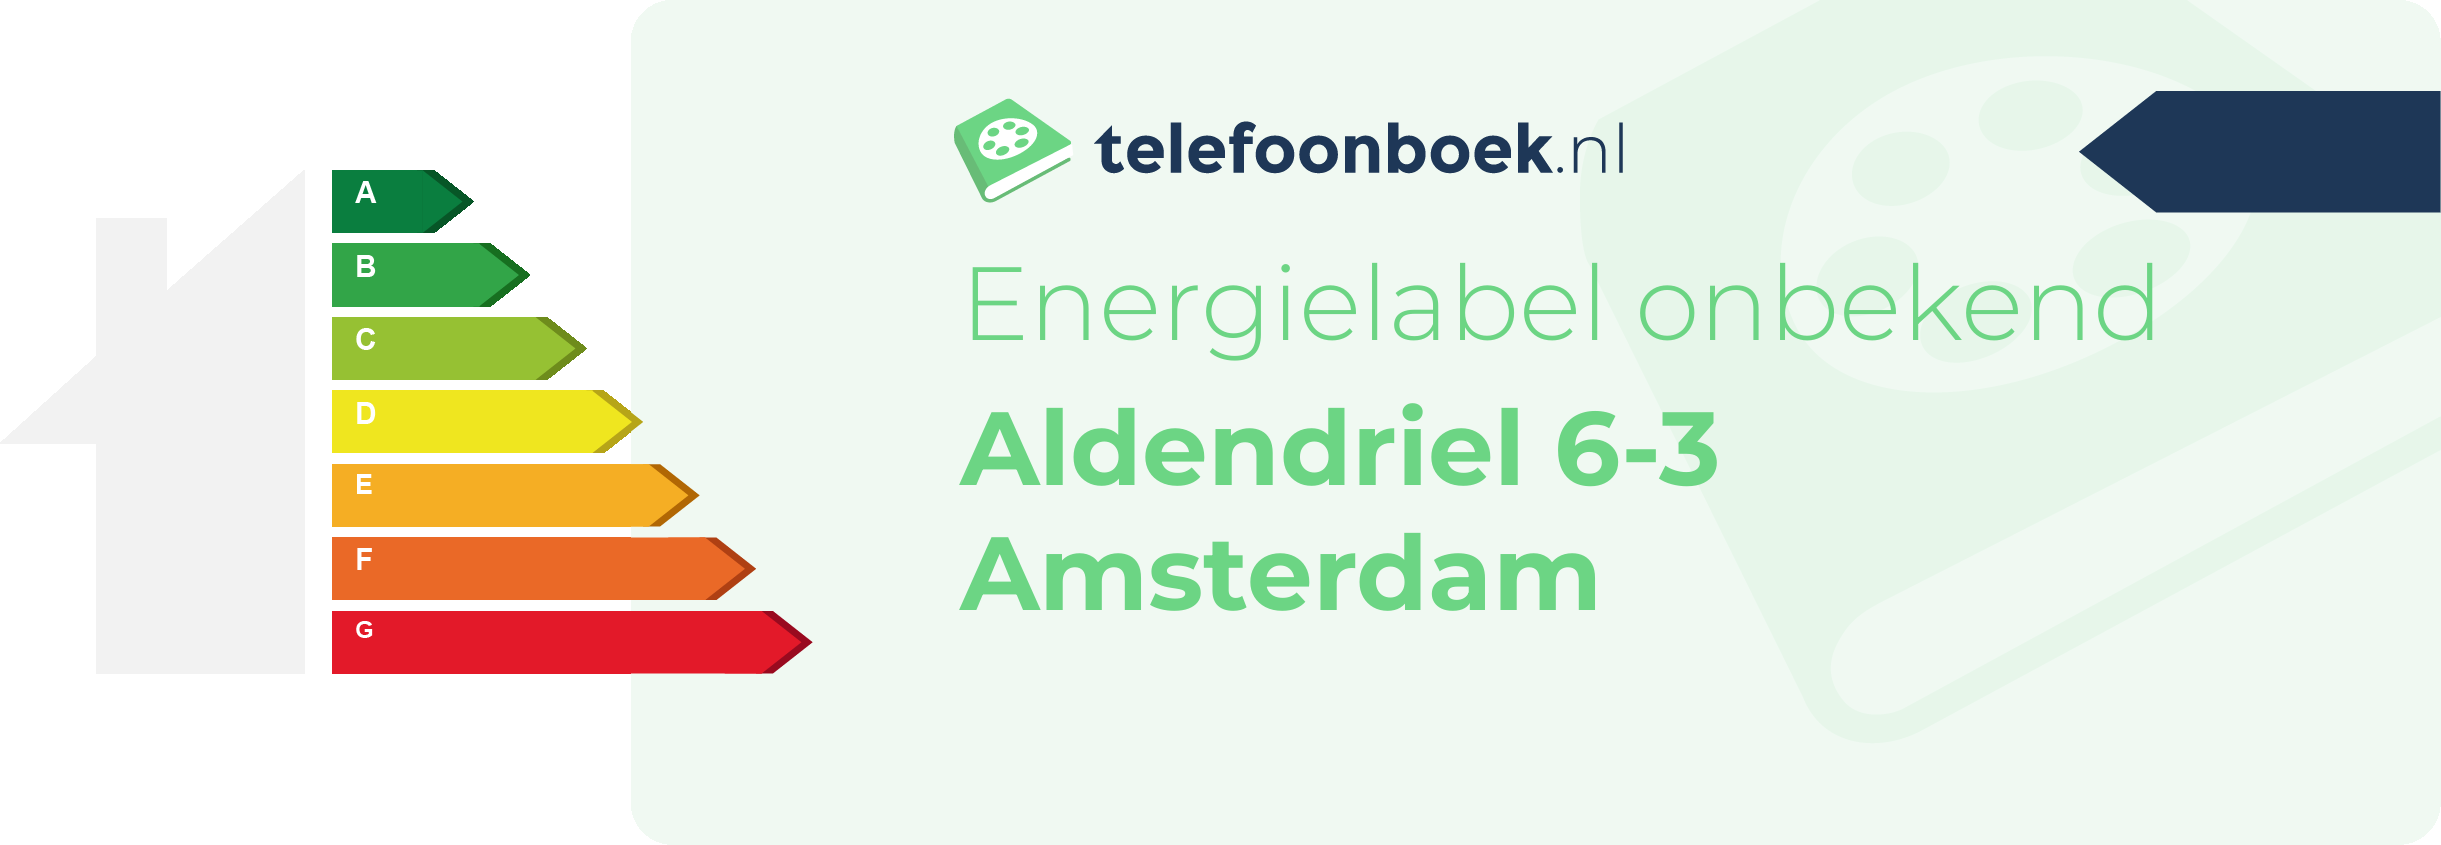 Energielabel Aldendriel 6-3 Amsterdam